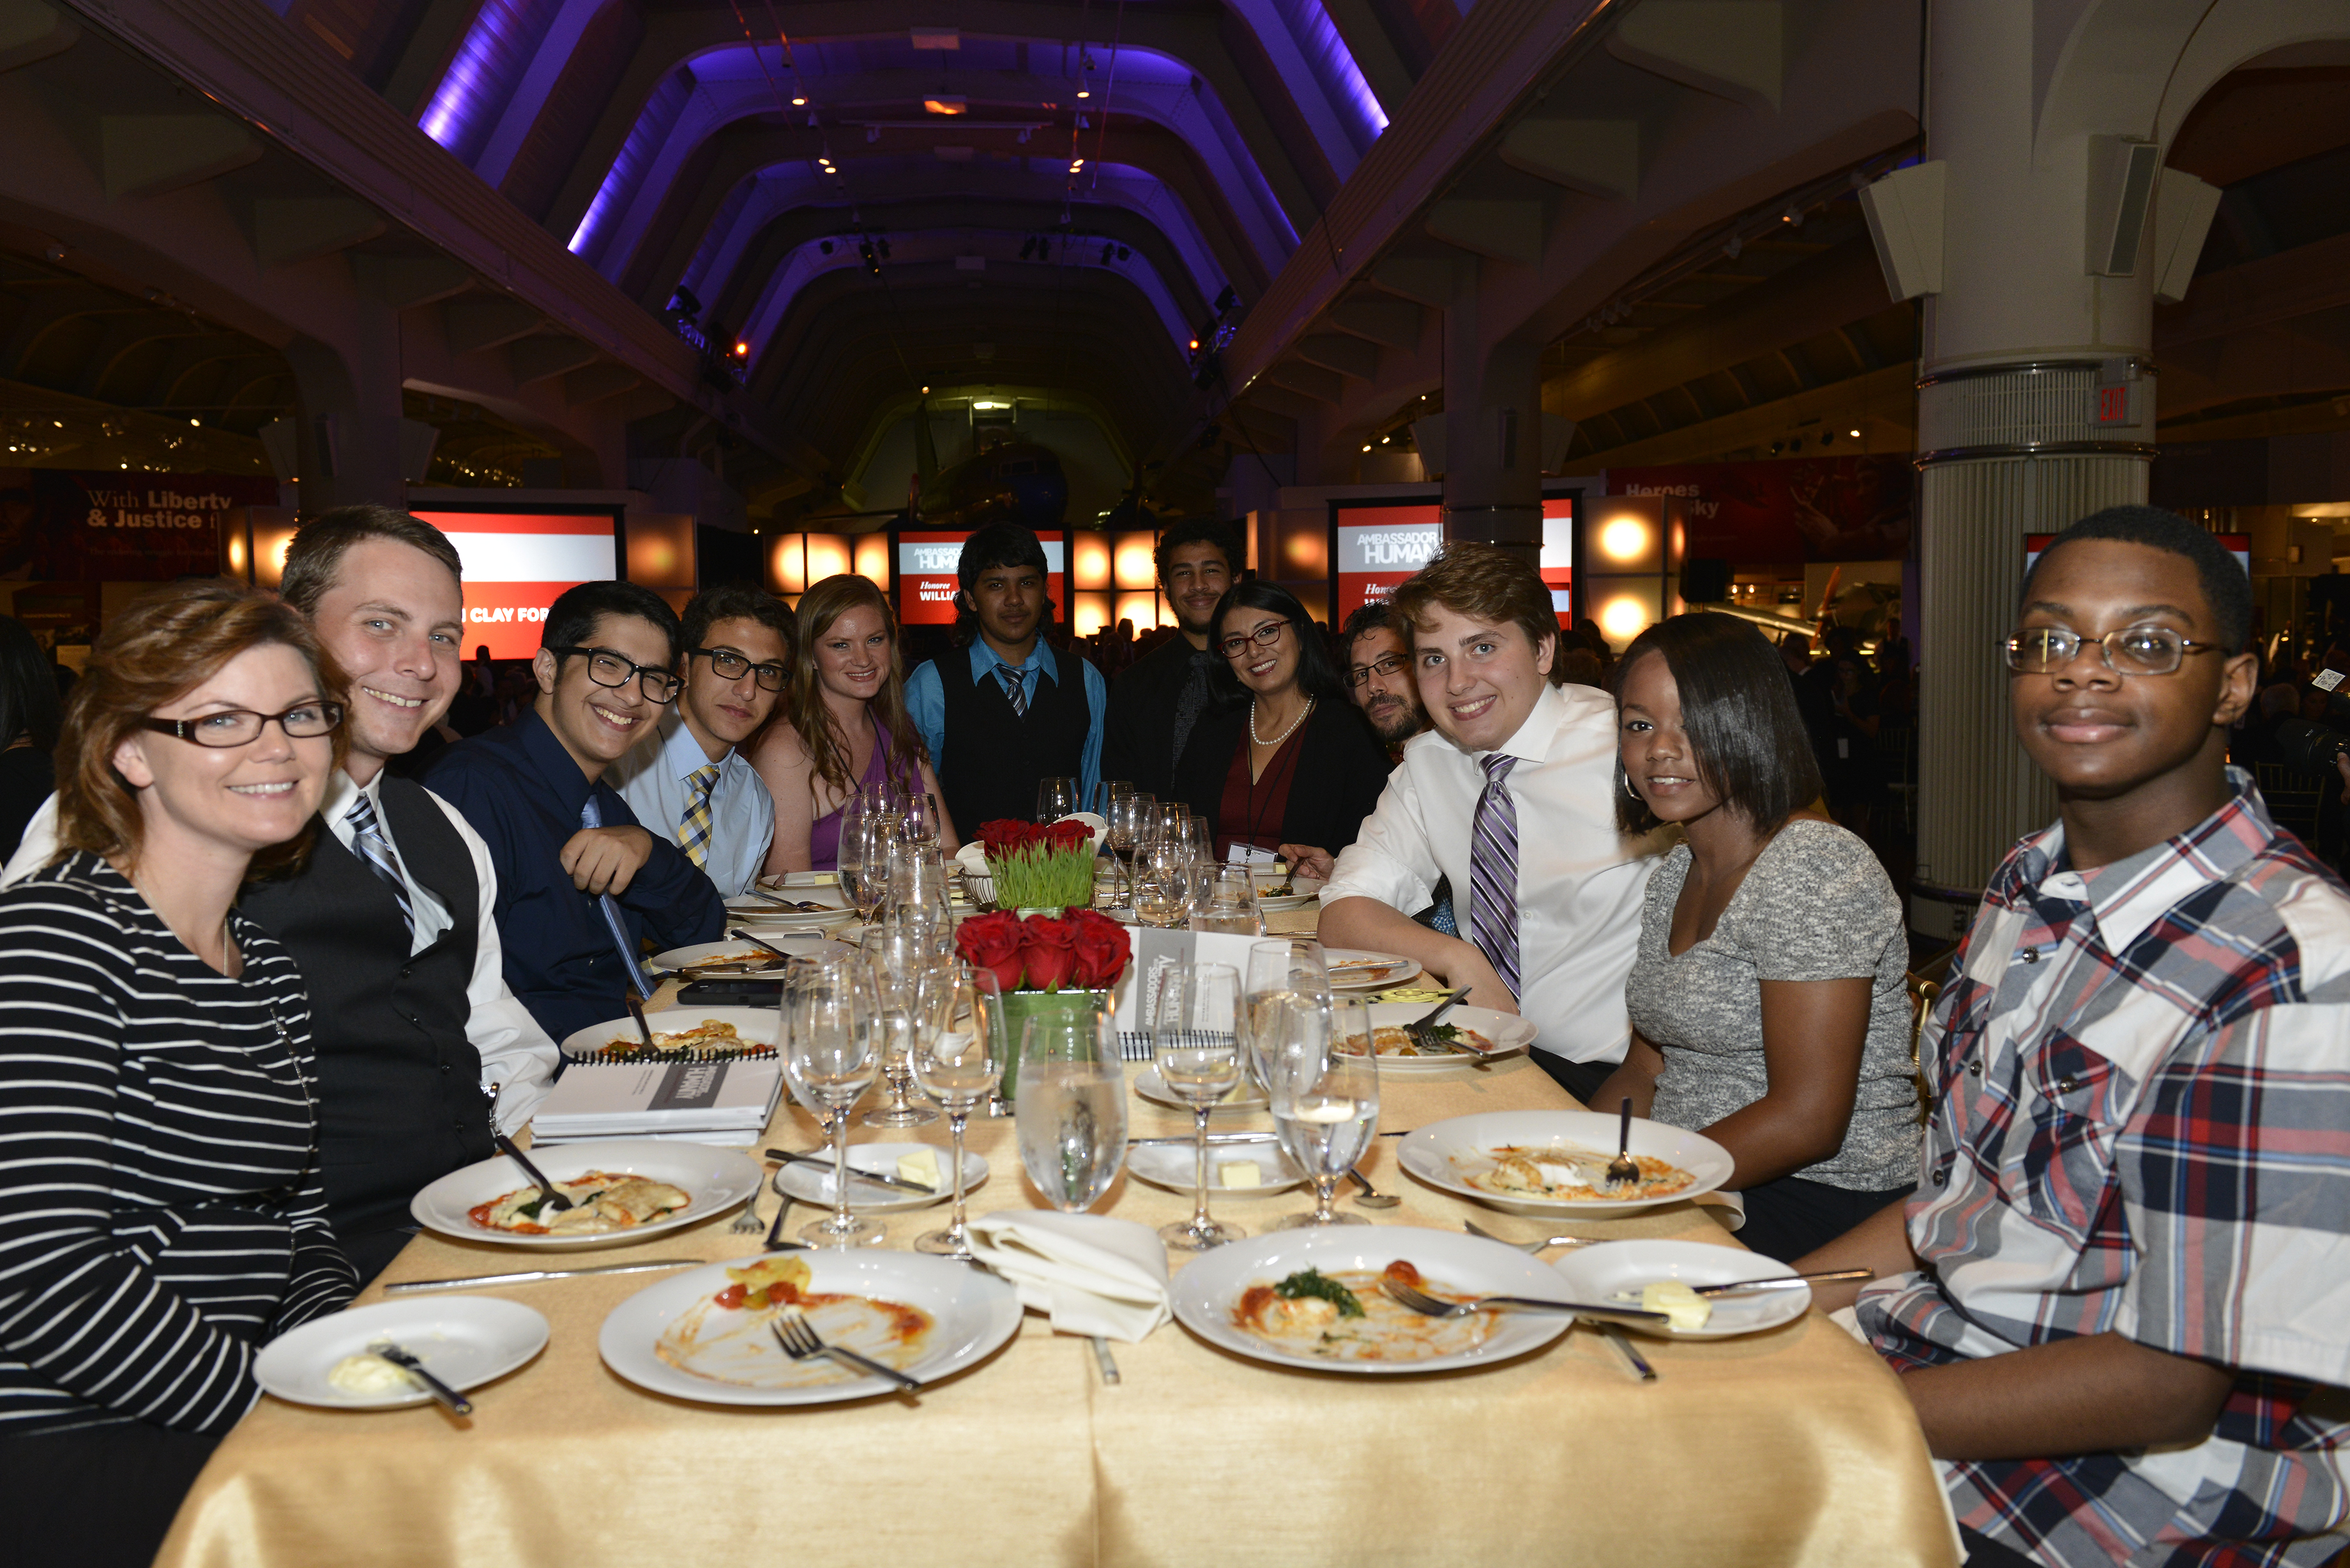 IWitness Detroit students enjoying the gala dinner